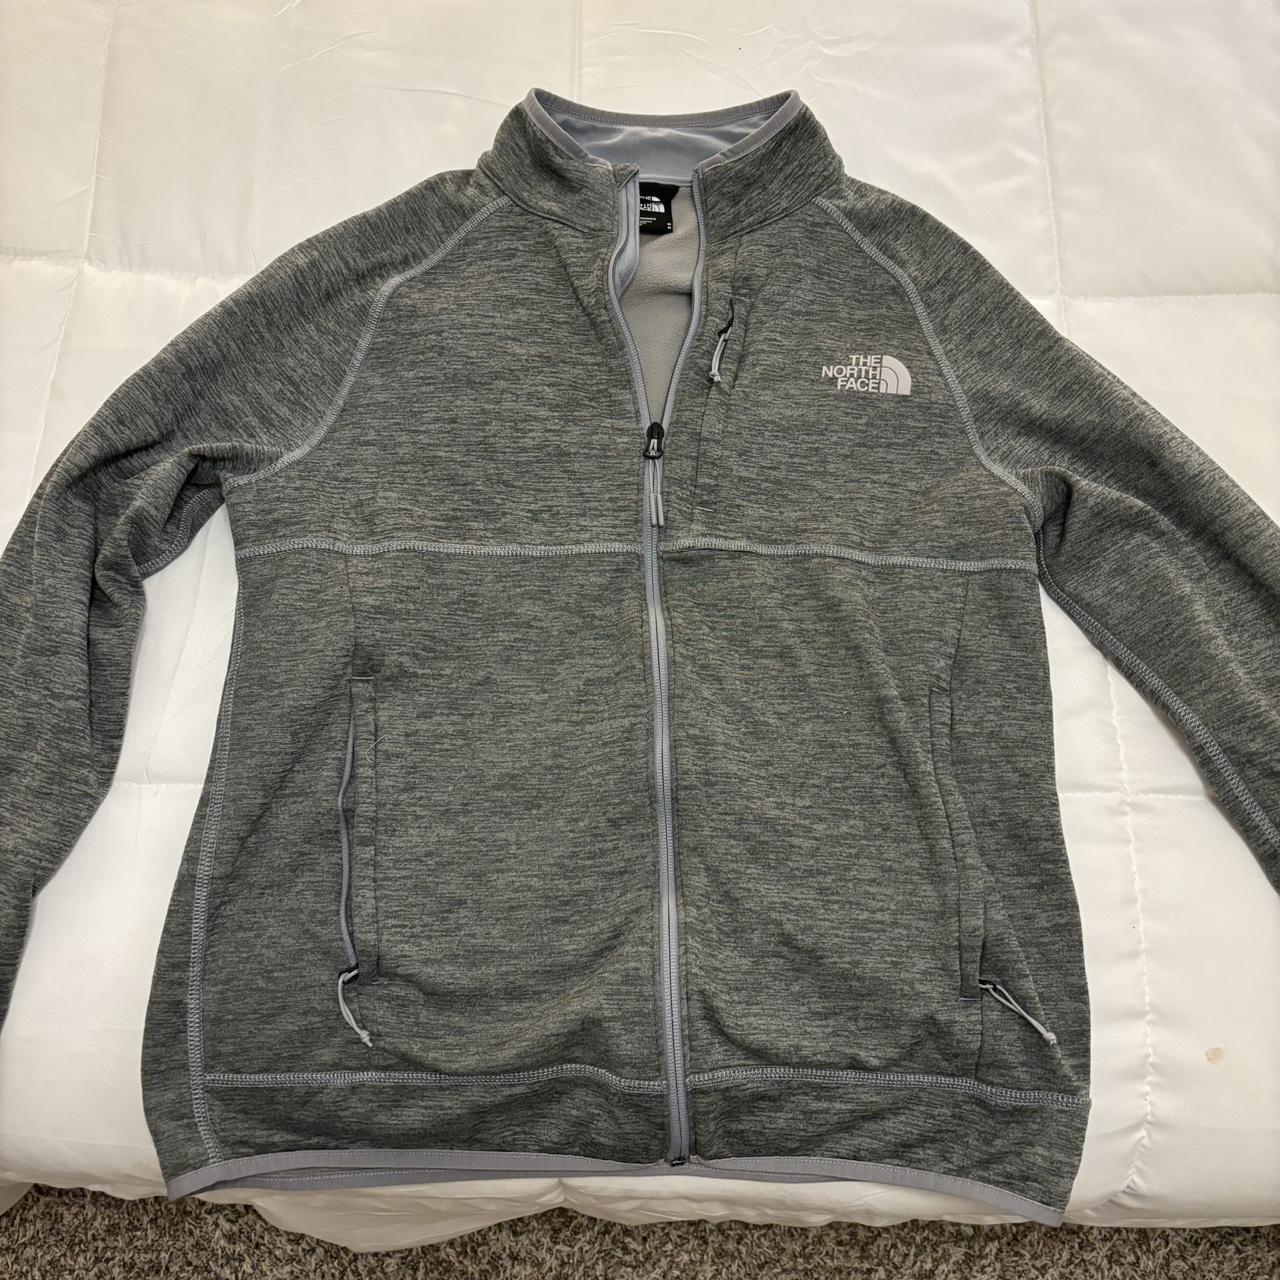 Grey north face jacket size medium - Depop